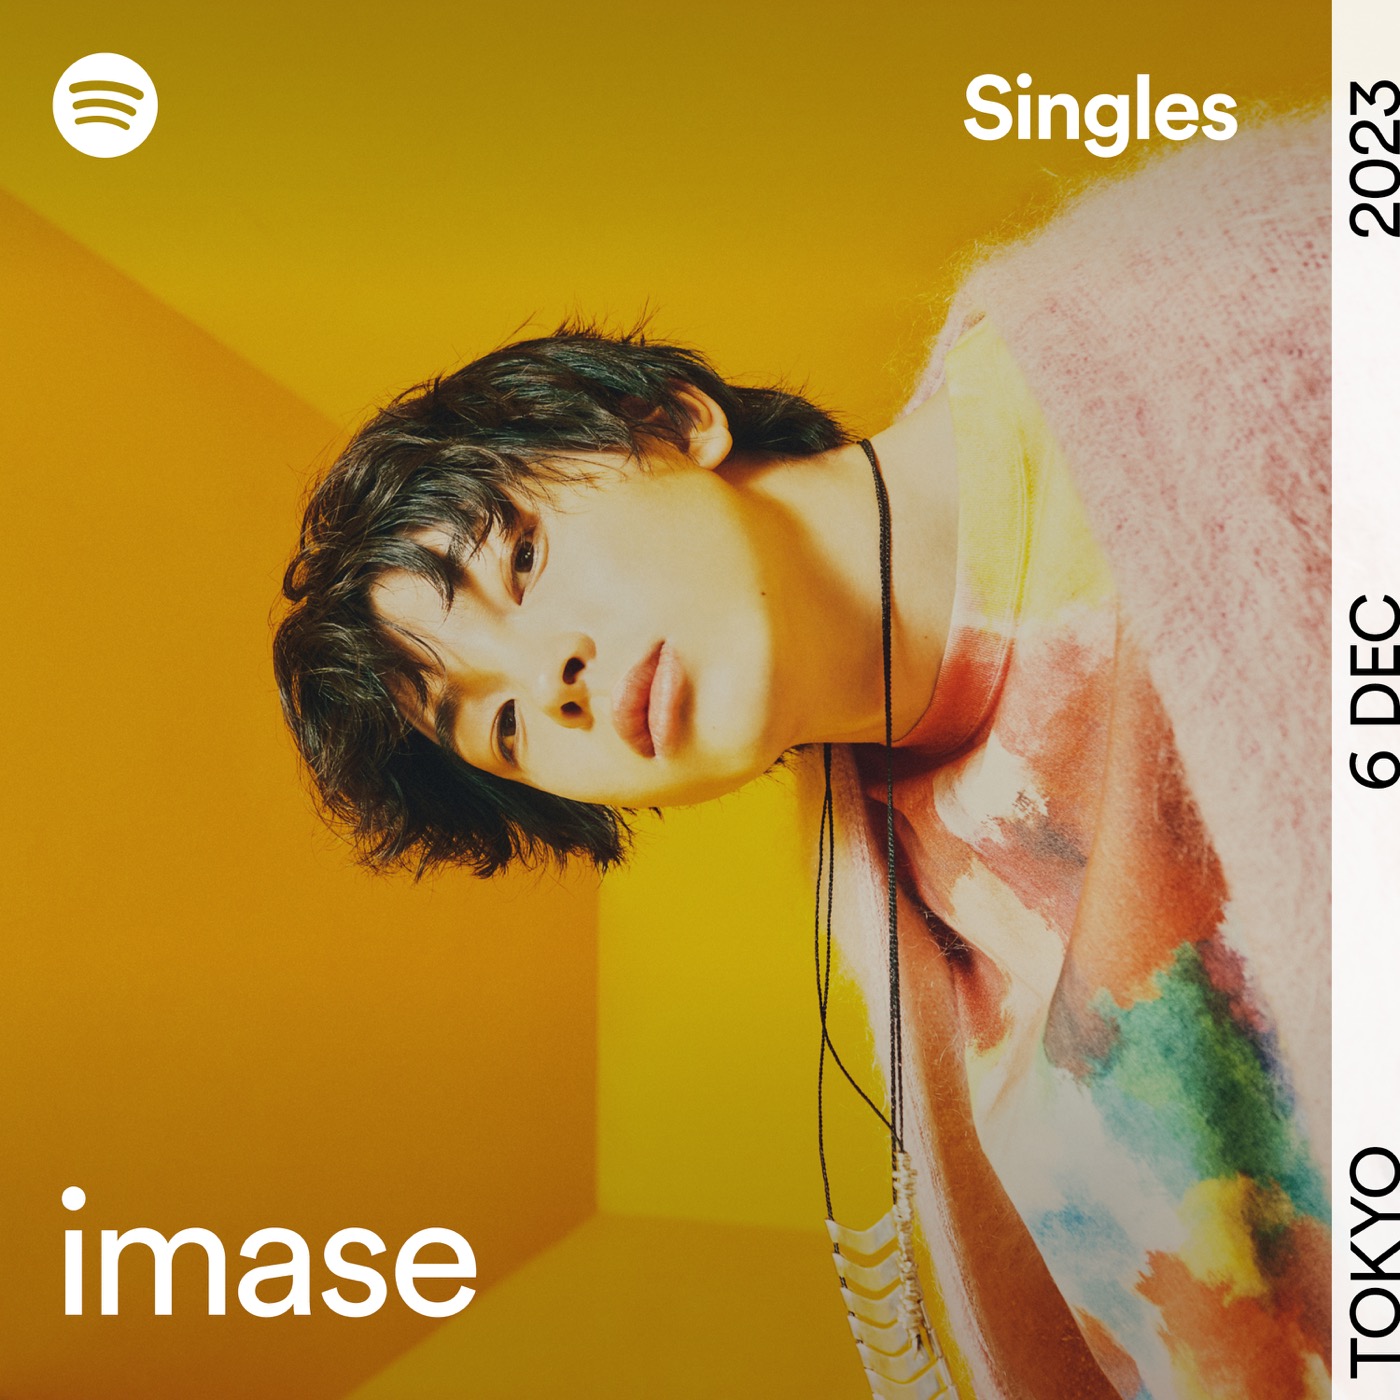 imase「Spotify Singles」最新シリーズに日本人アーティストとして唯一の参加決定